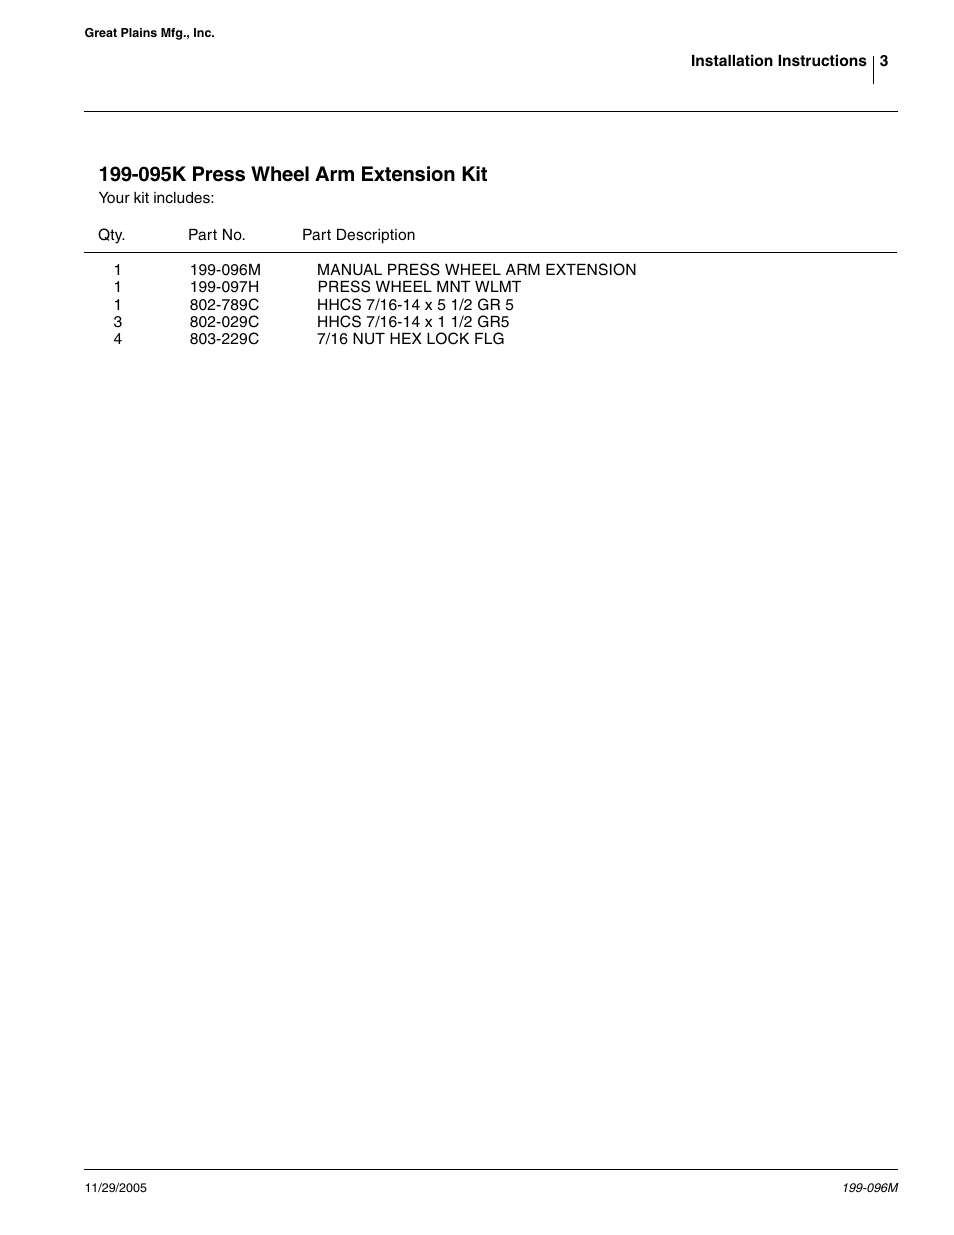 095k press wheel arm extension kit | Great Plains 20P 1x12 Press Wheel Arm Extension Kit User Manual | Page 3 / 3